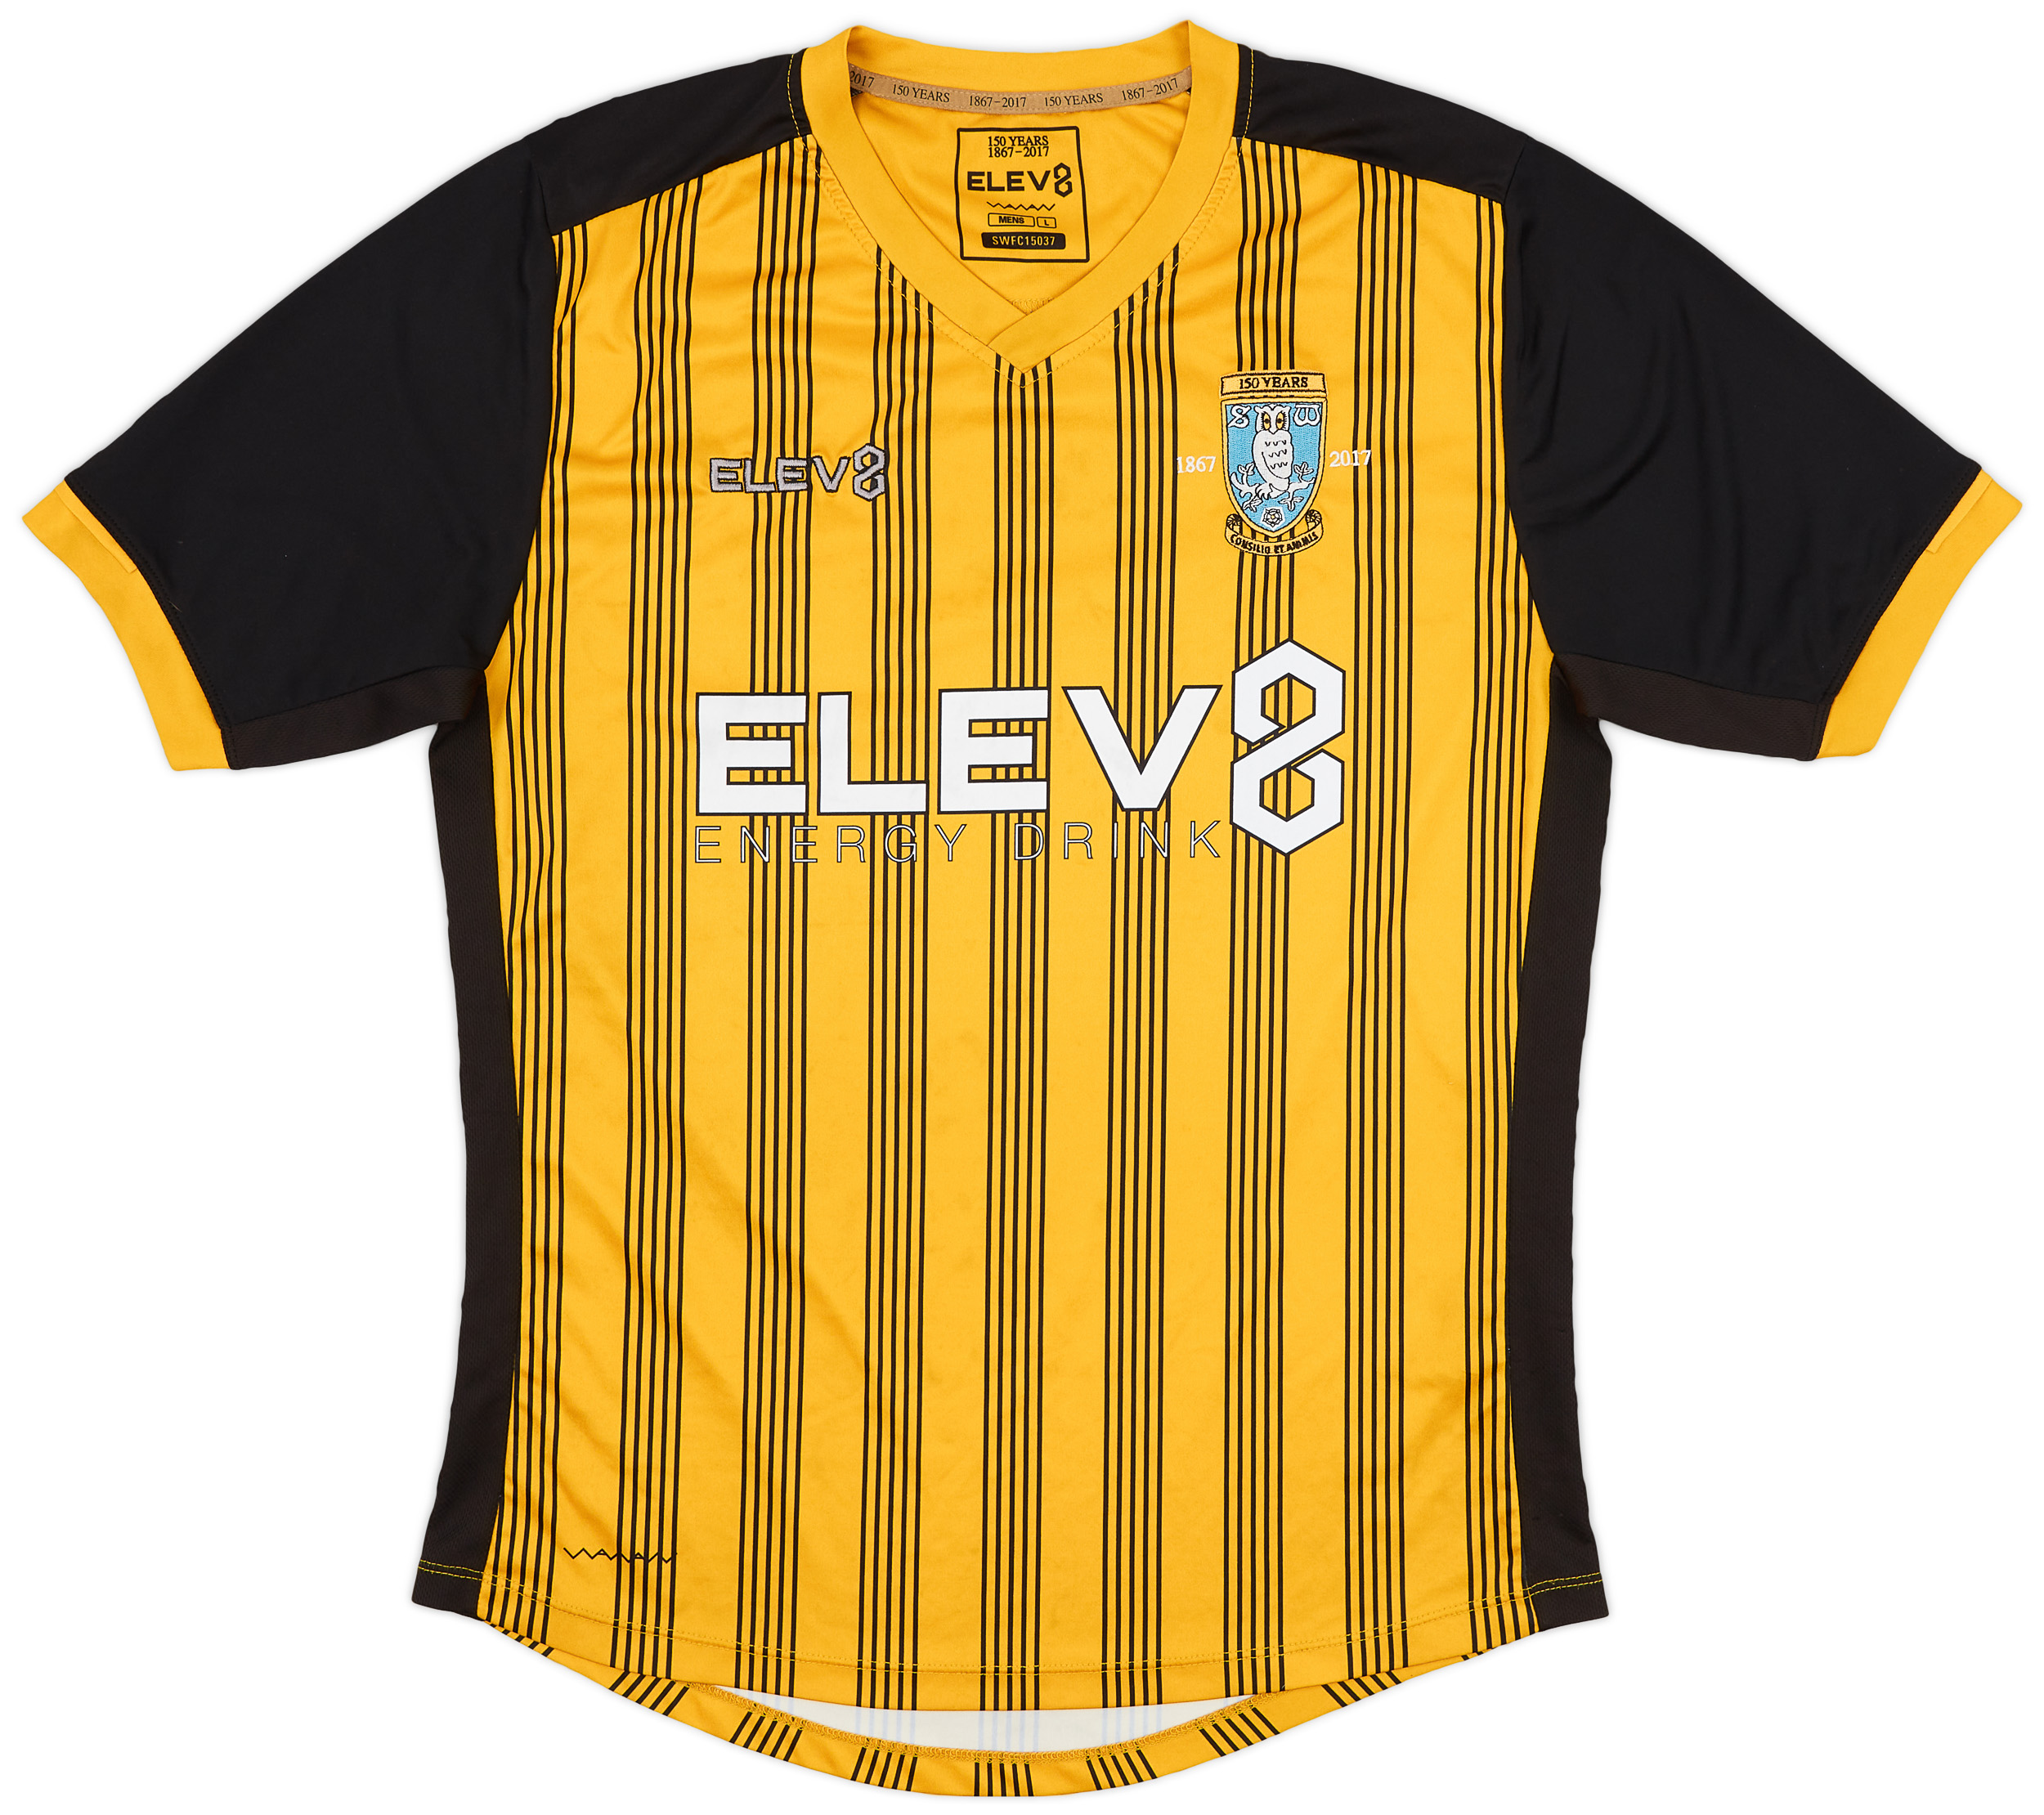 Sheffield Wednesday Home football shirt 2020 - 2021.